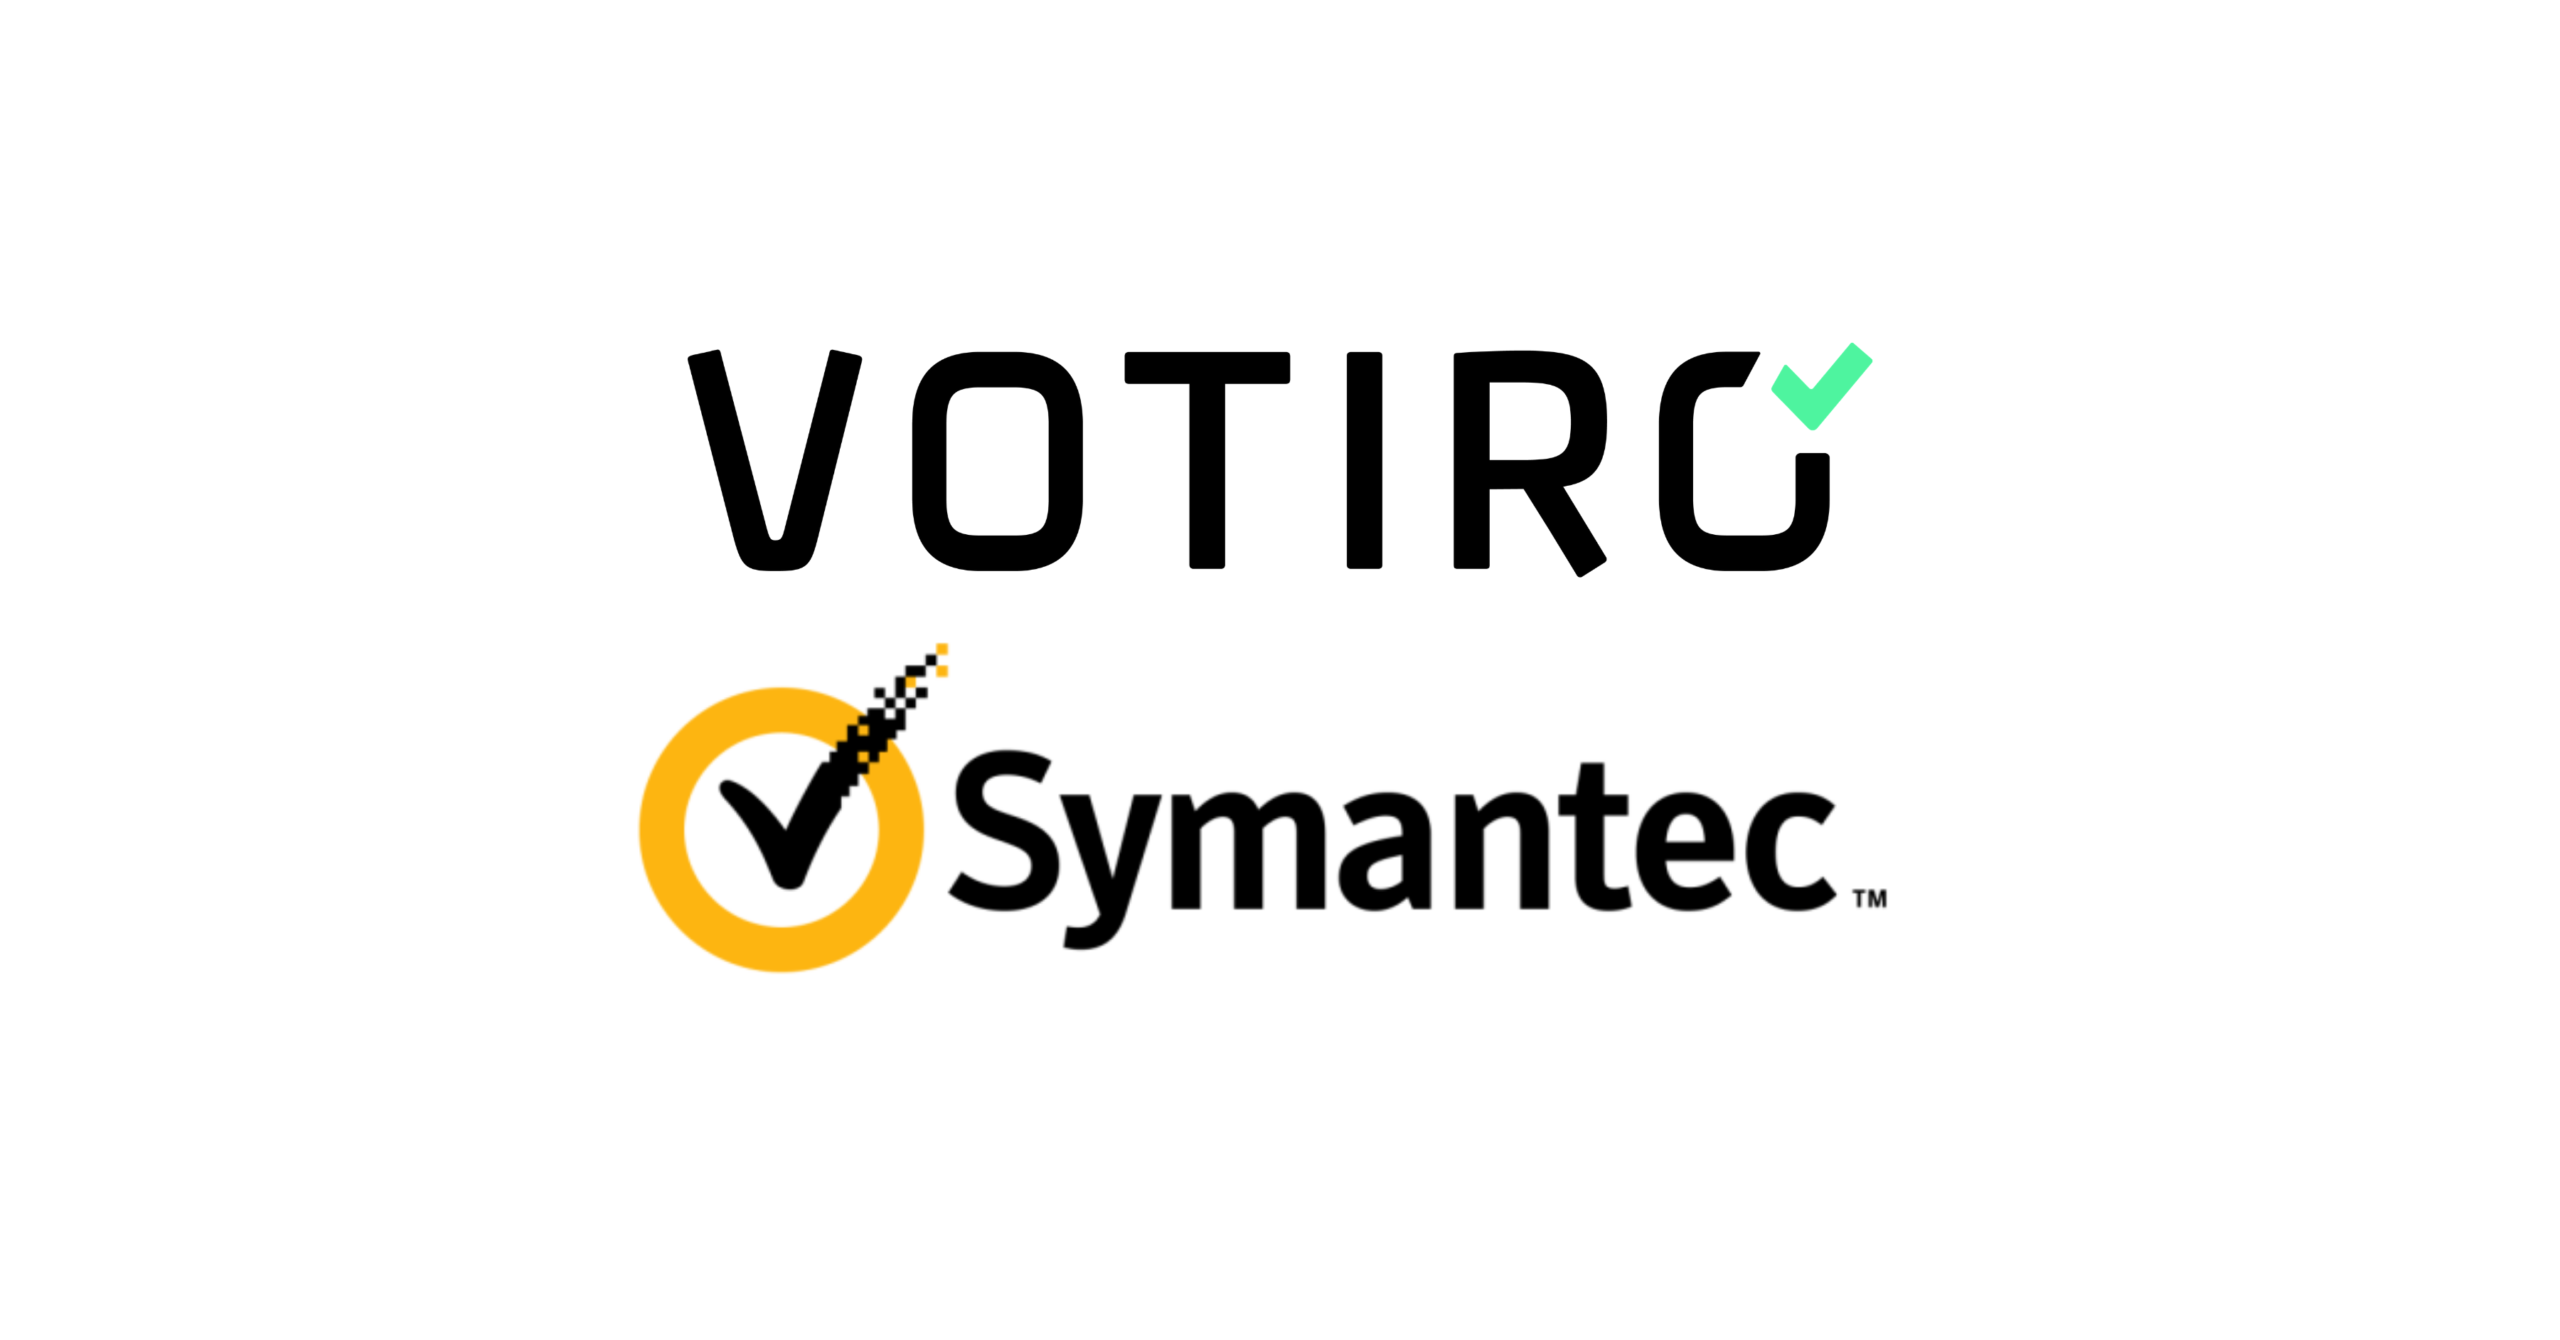 Votiro logo and Symantec logo on white background - Votiro